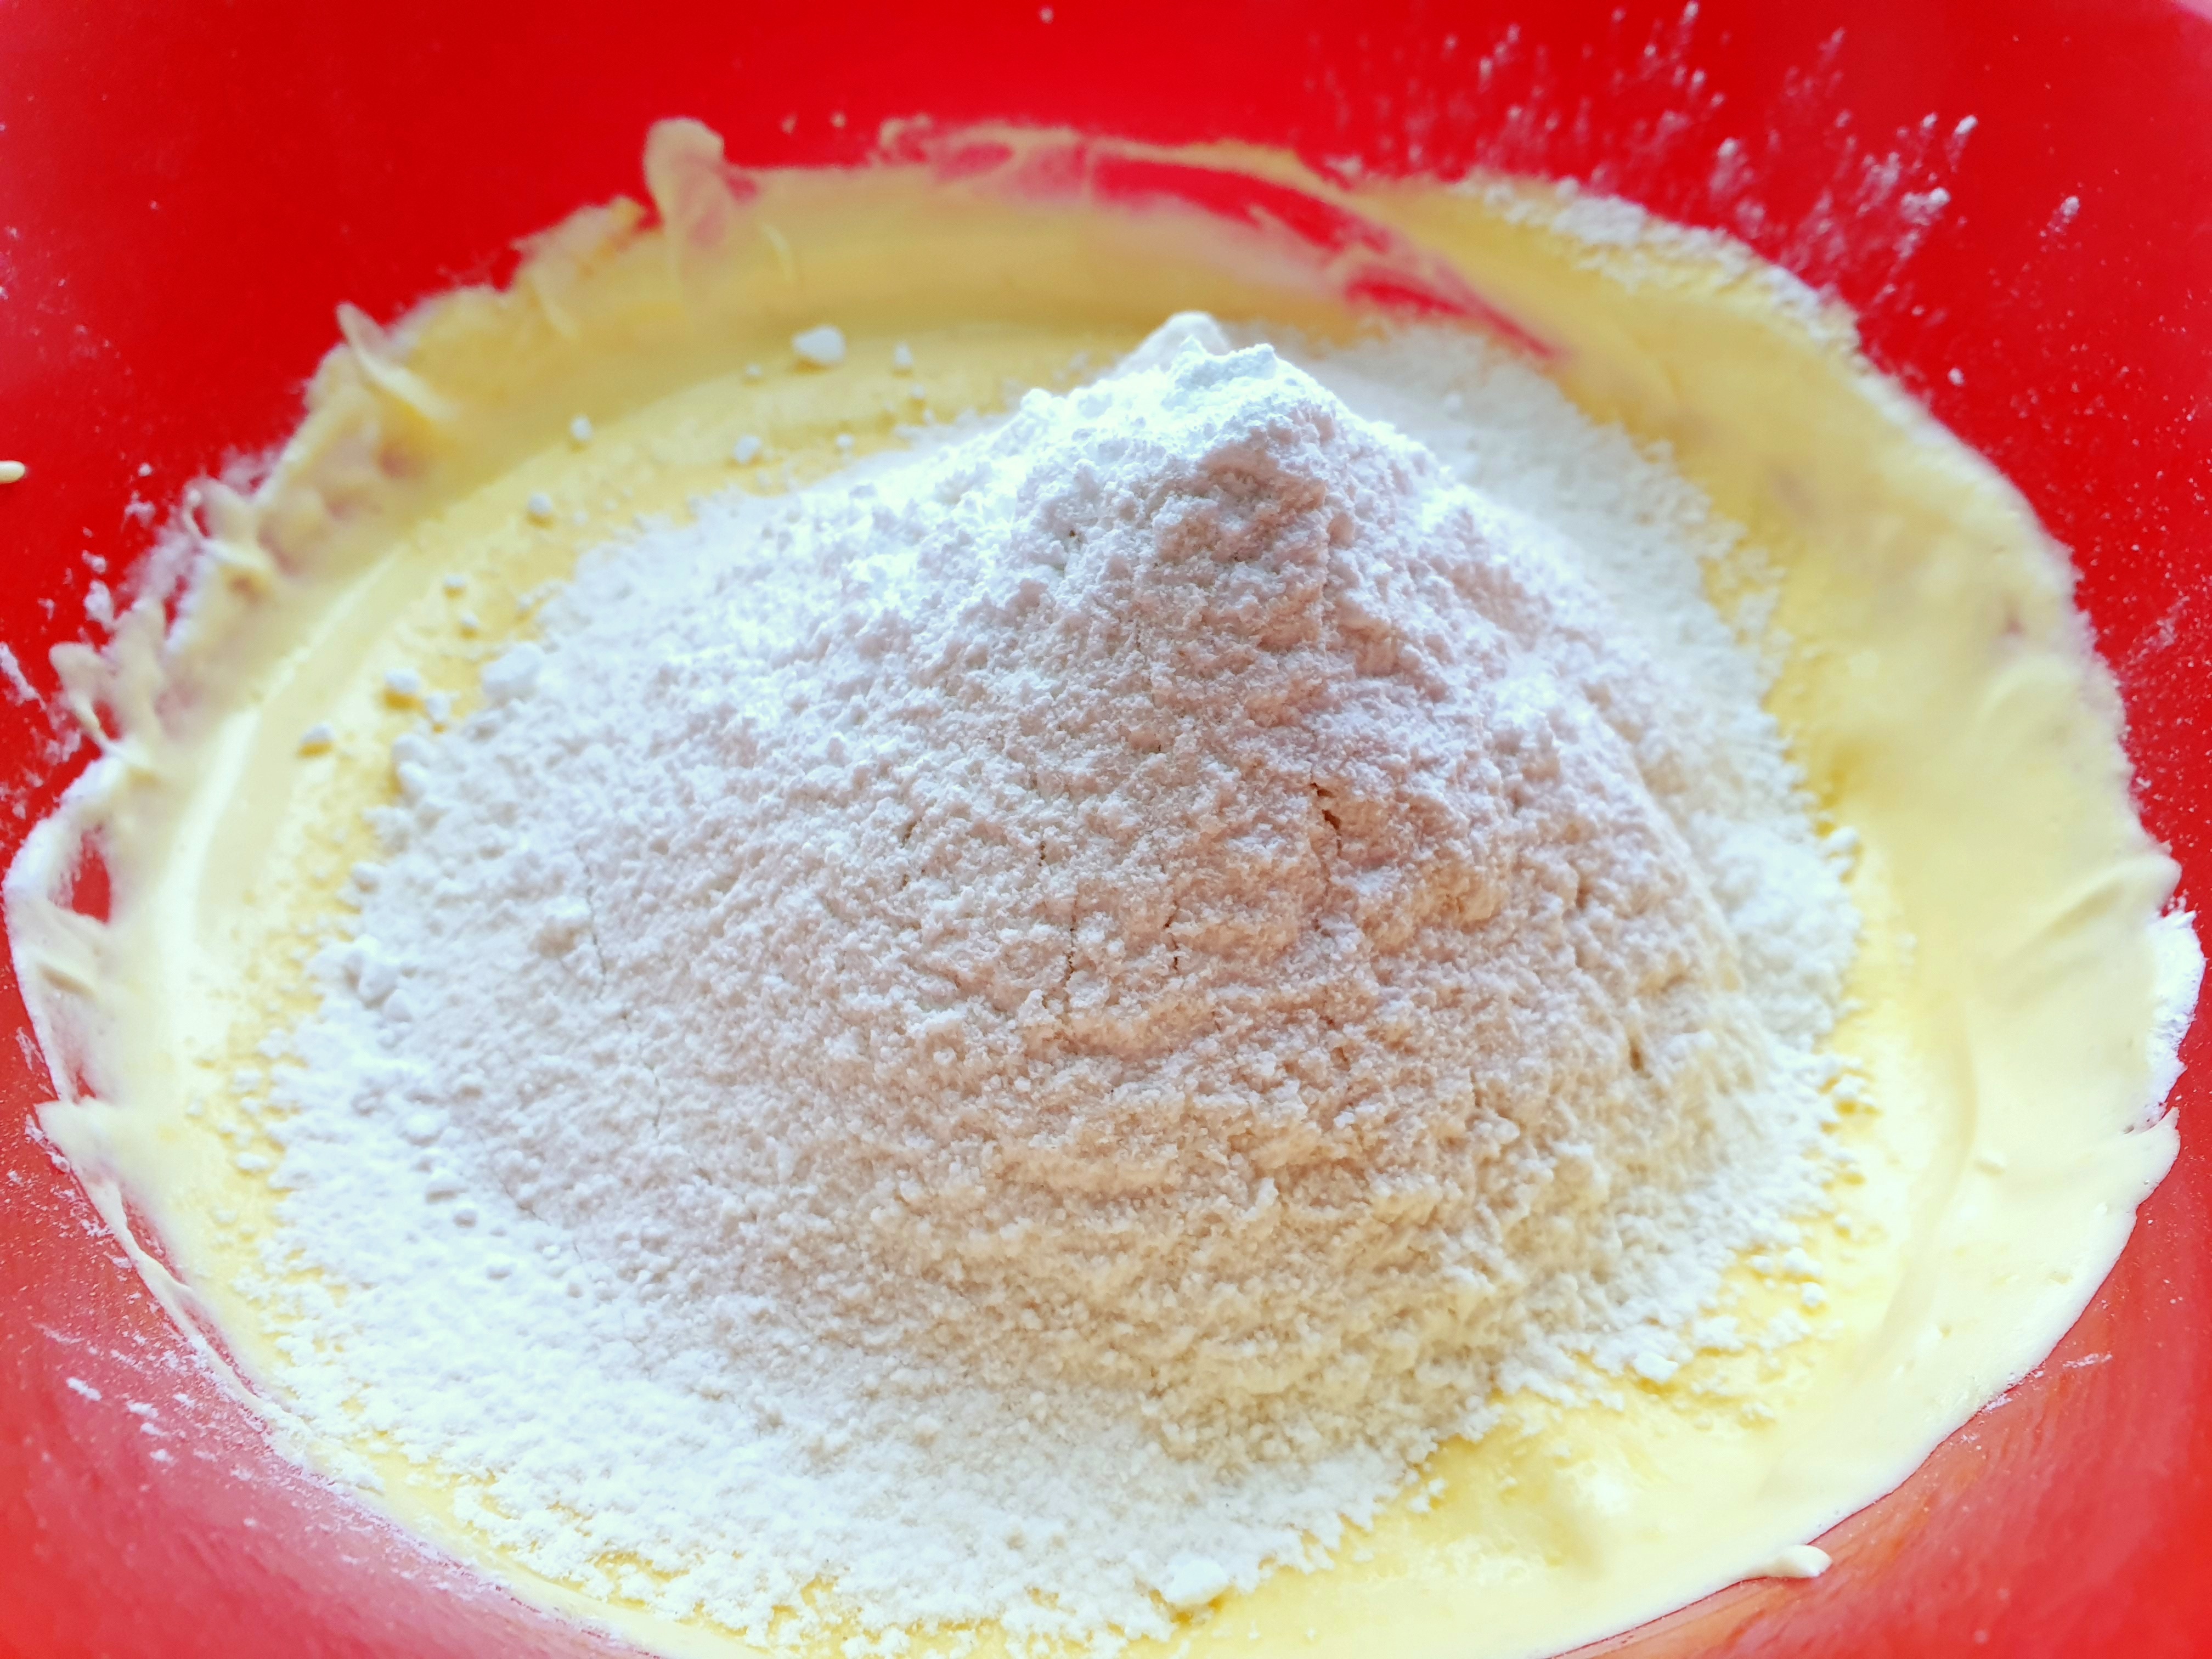 Desert prajitura cu nuca de cocos si crema cu ciocolata alba si lapte condensat (Raffaello)